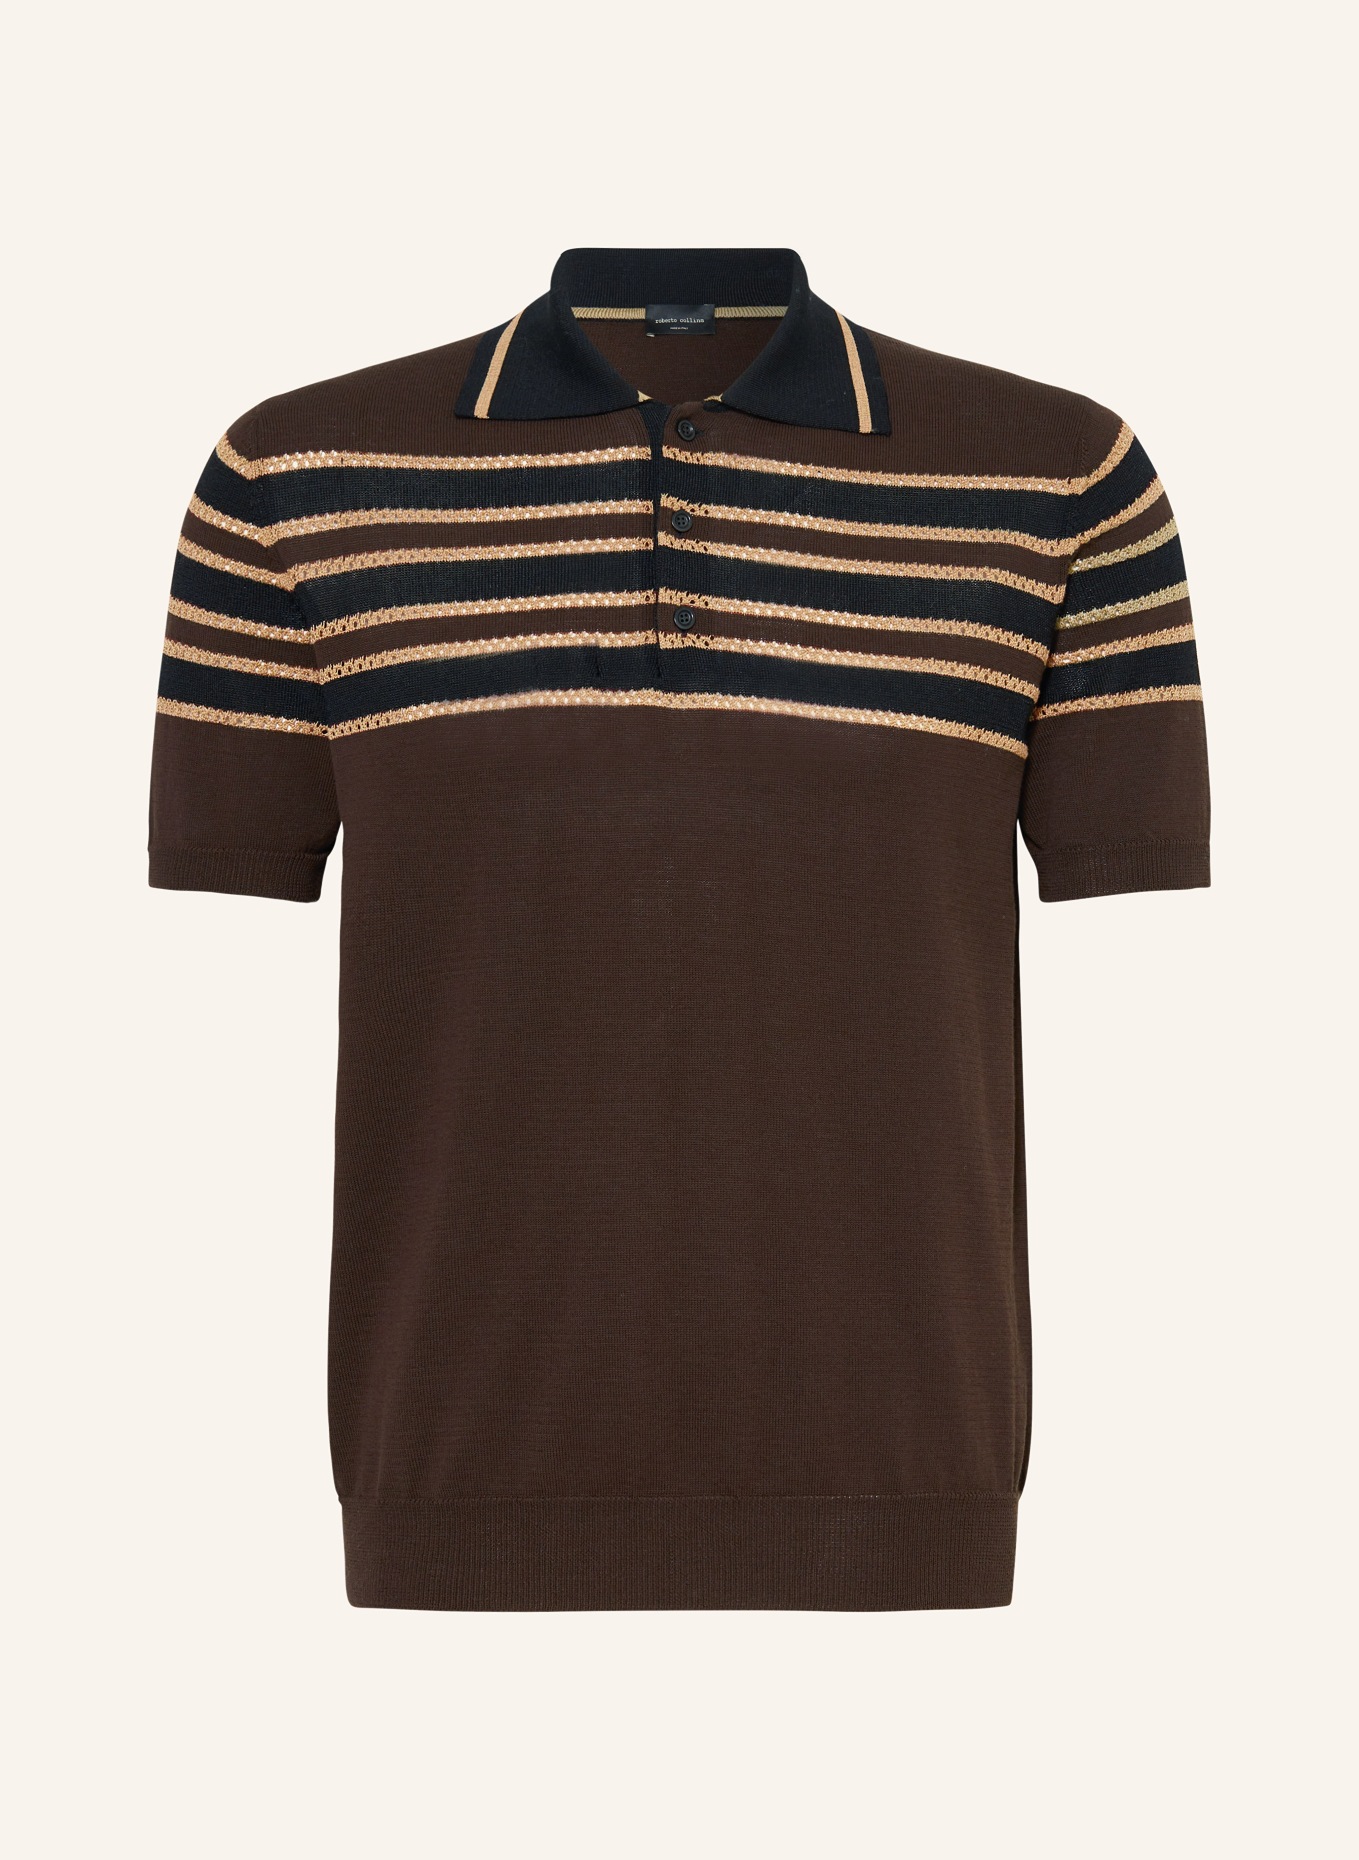 roberto collina Strick-Poloshirt, Farbe: DUNKELBRAUN/ CAMEL/ SCHWARZ (Bild 1)